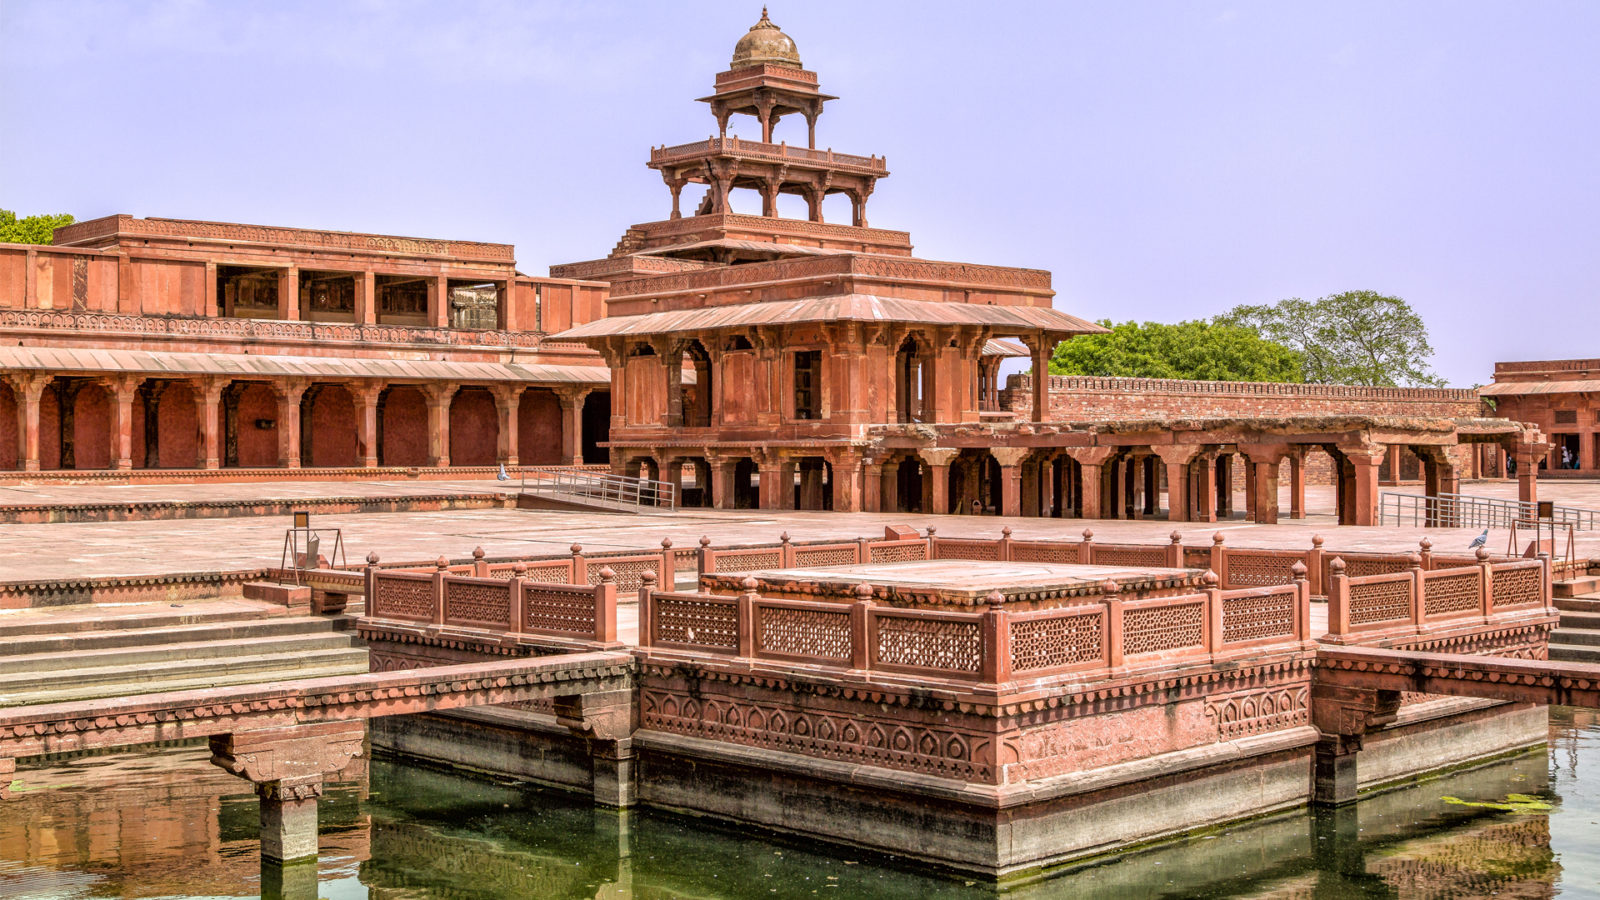 Fatehphur-Sikri-Agra-India-1600x900.jpg